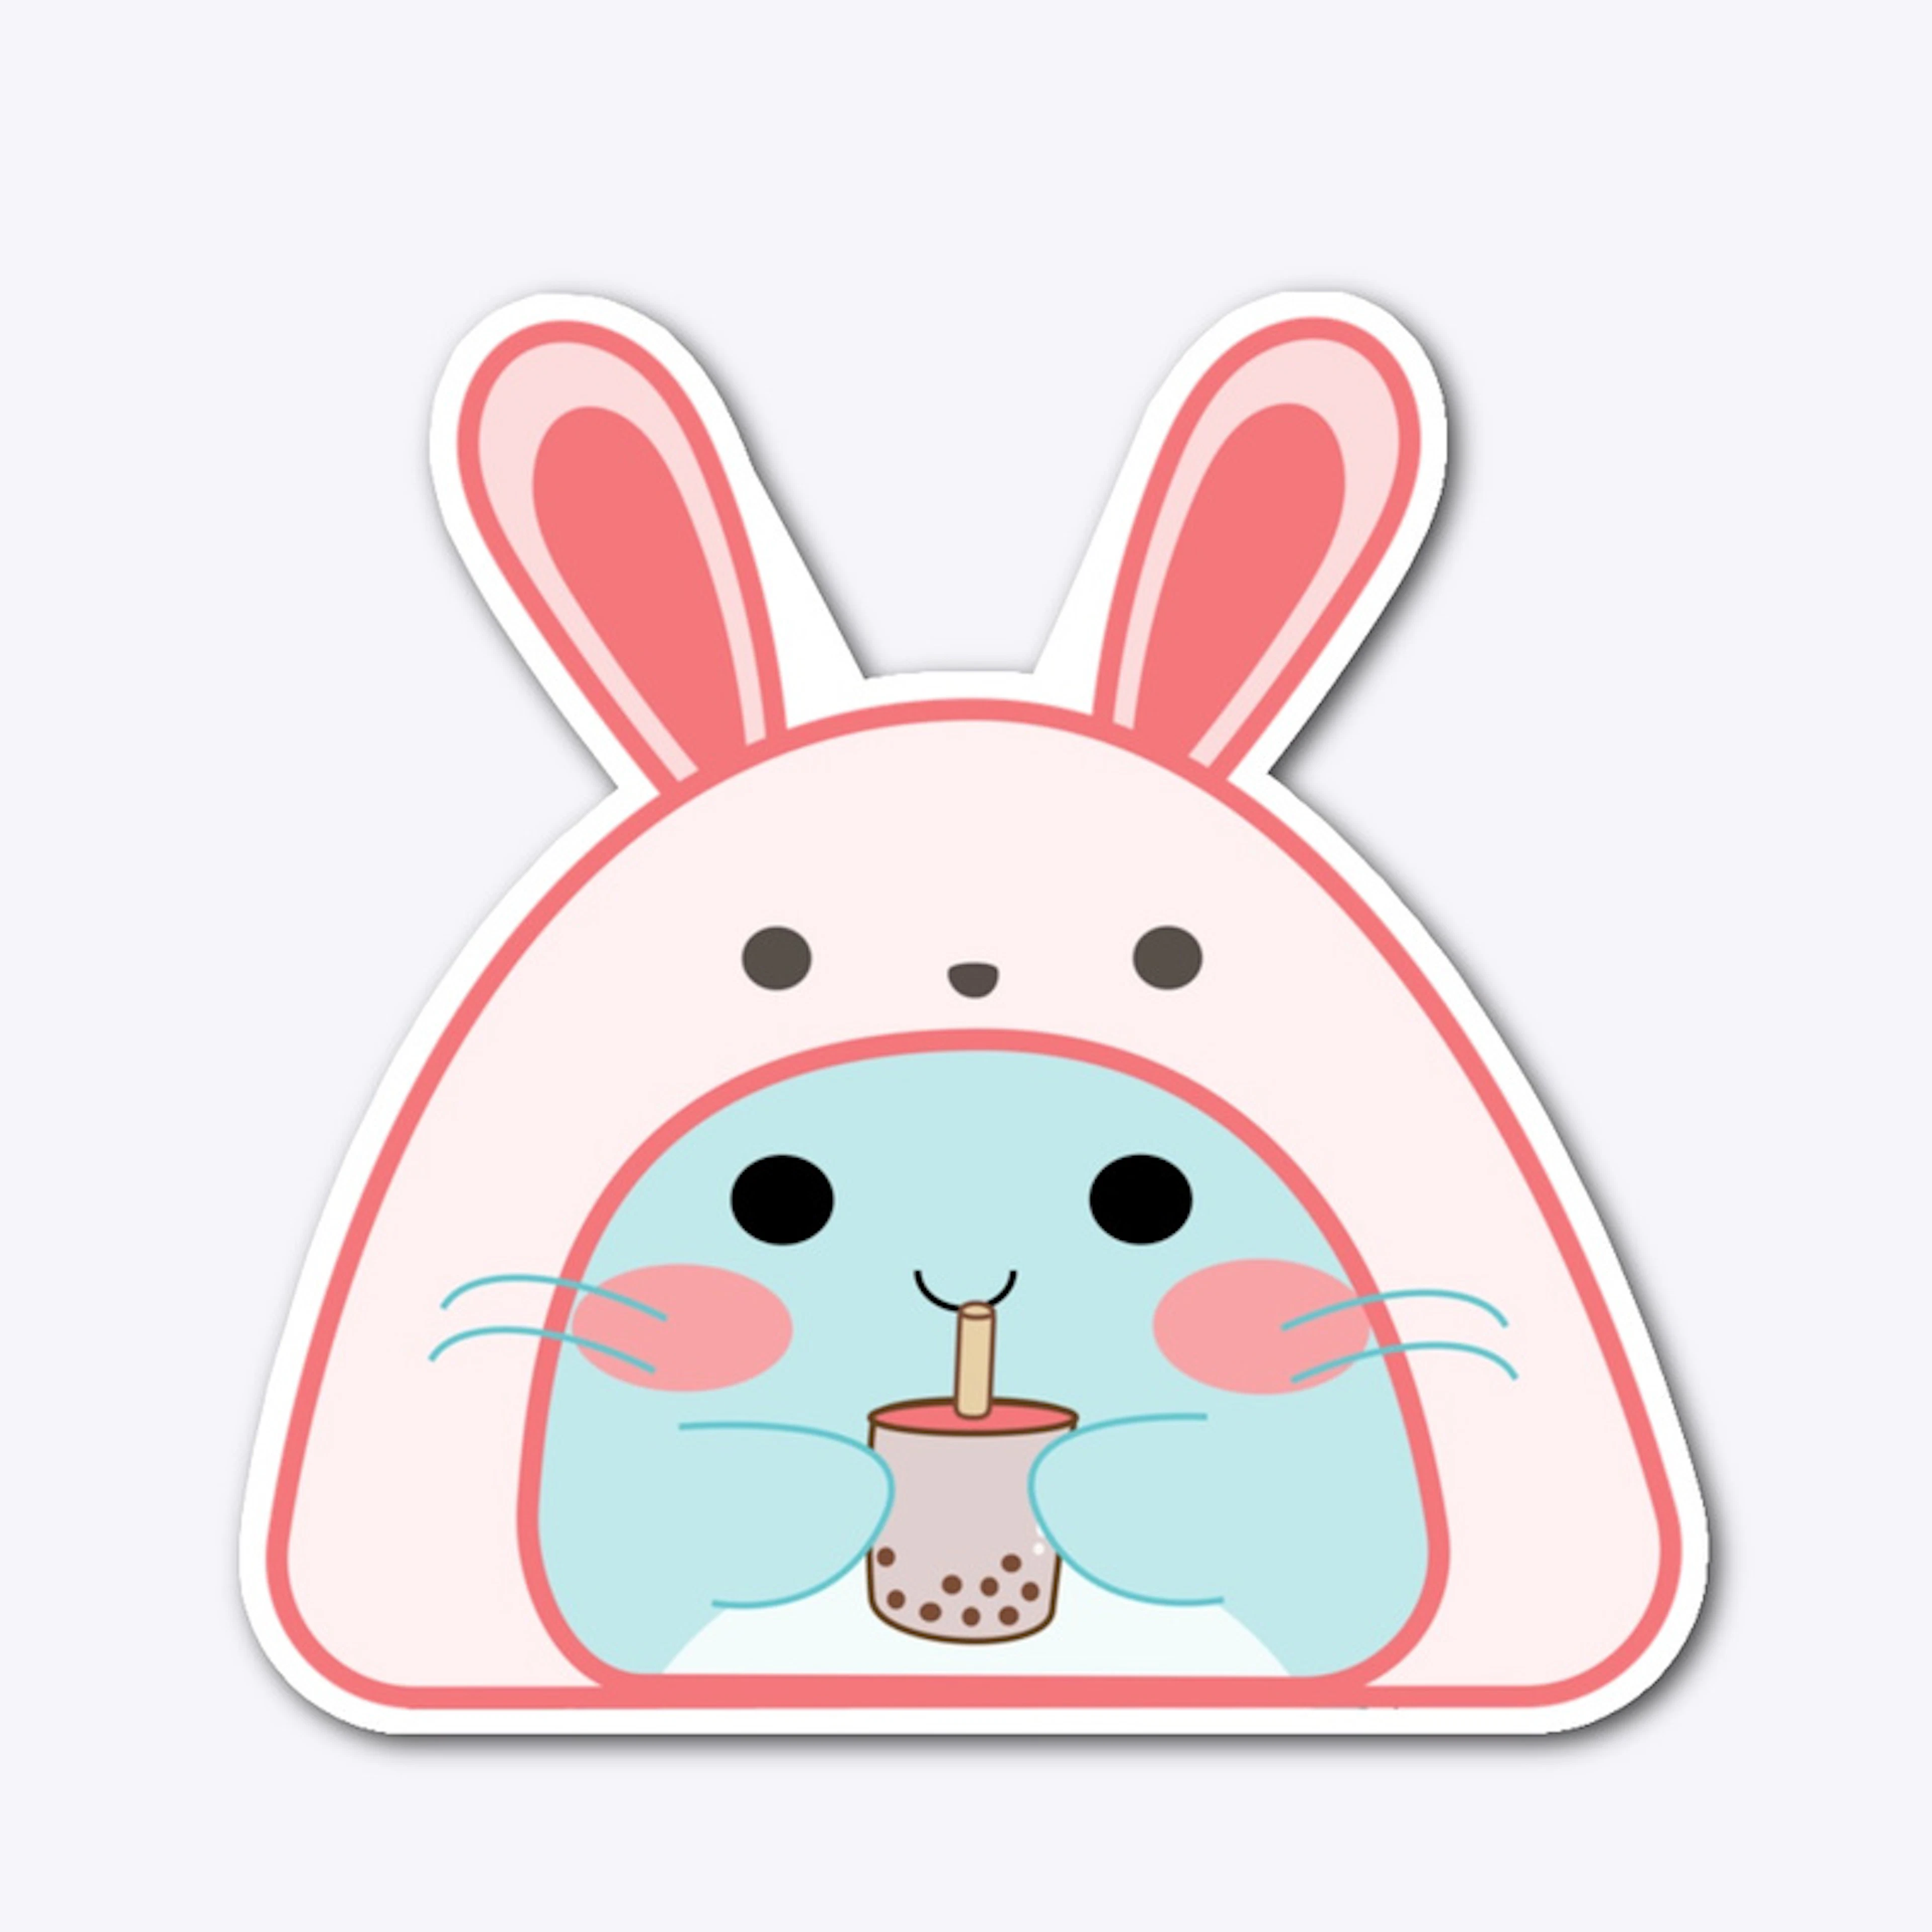 Lunar in rabbit suit drinking boba tea